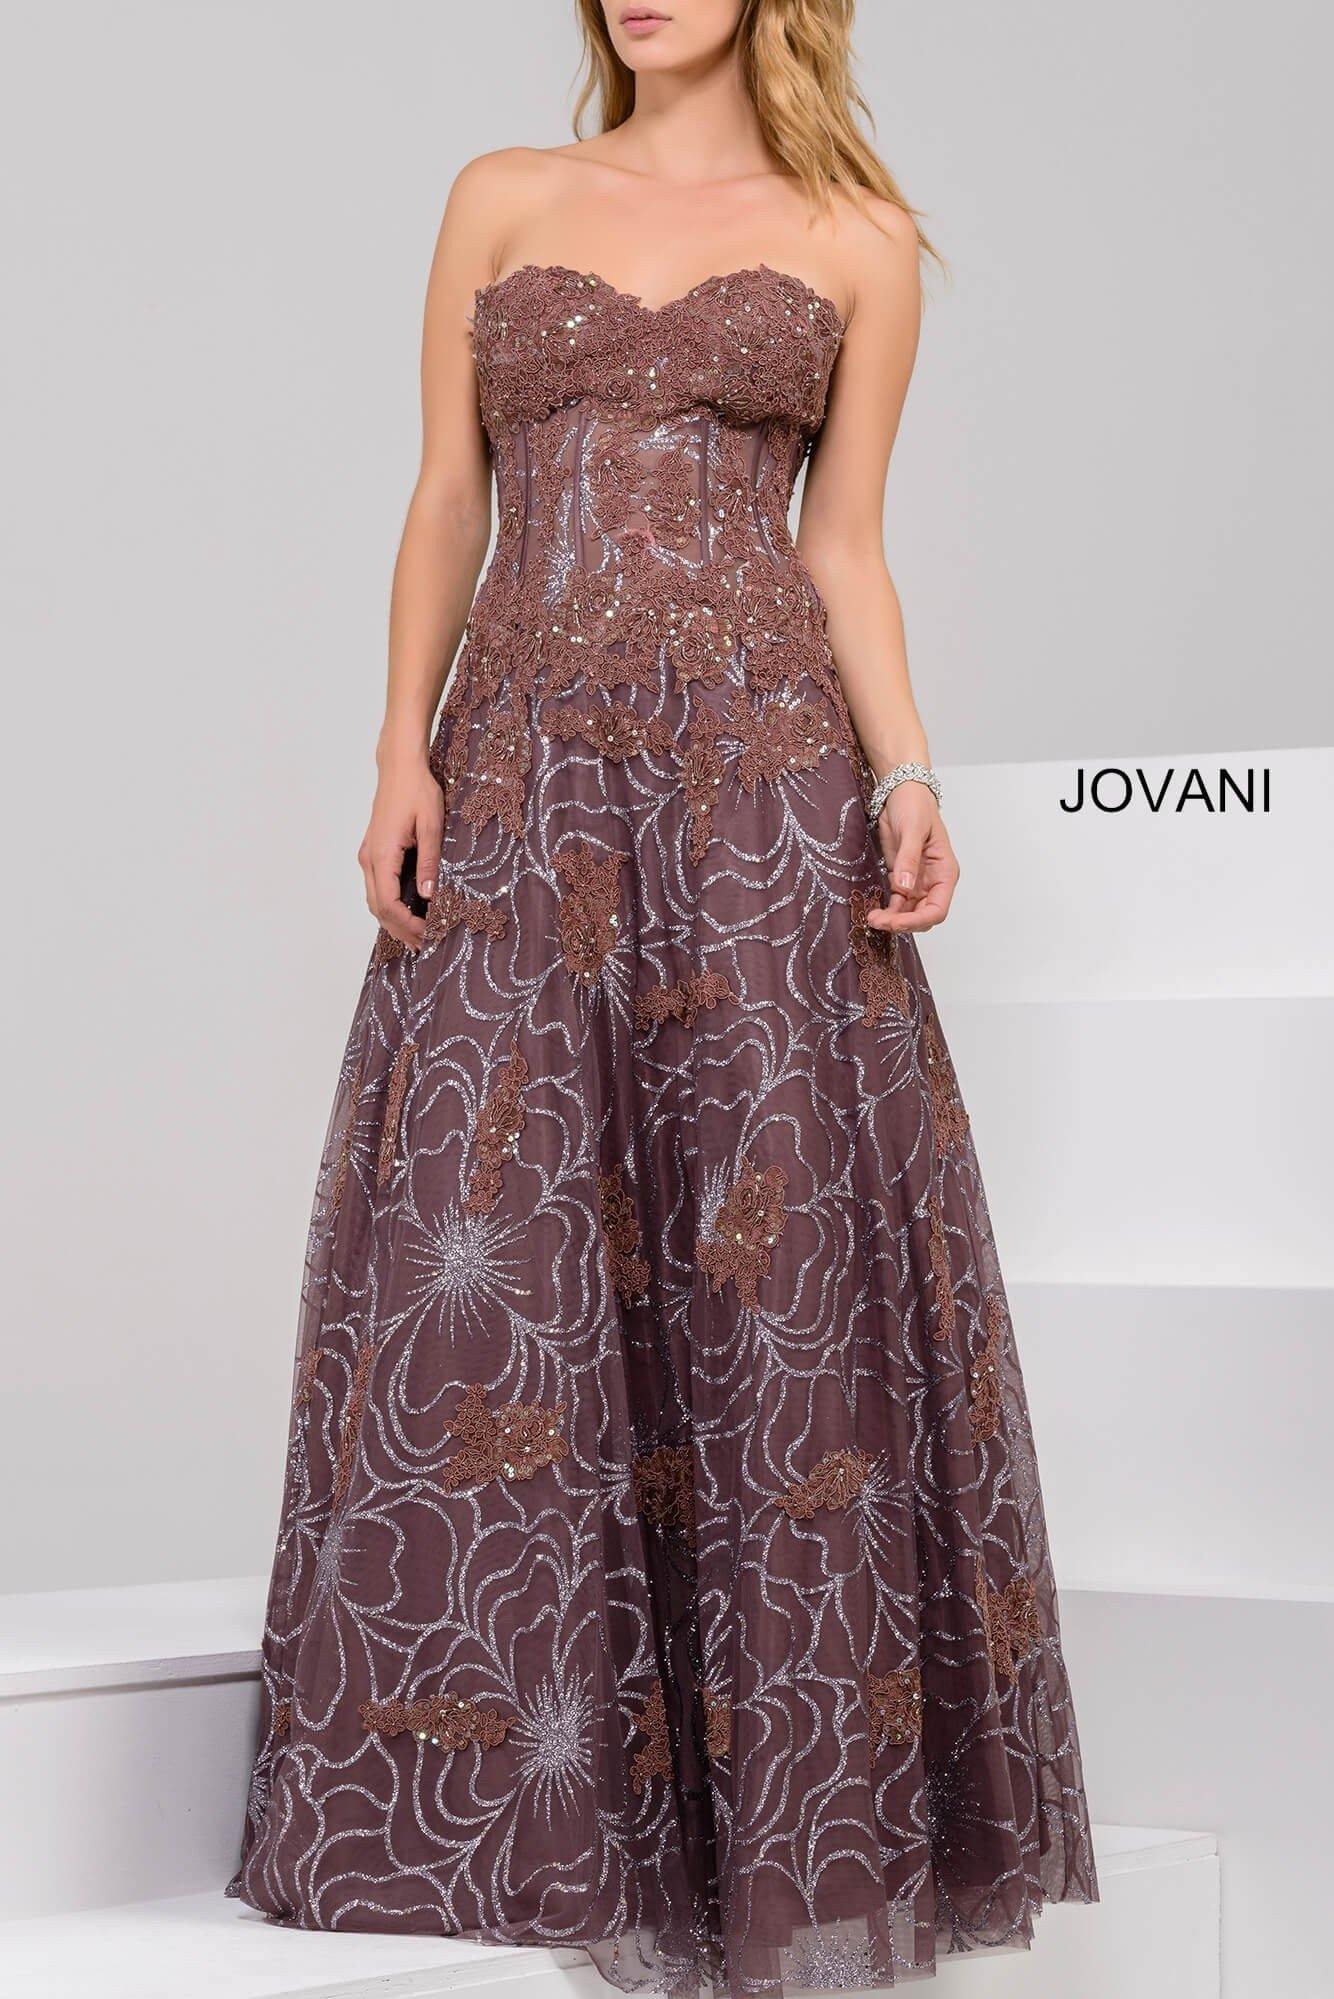 Jovani Mother of the Bride Long Formal Dress 14913 - The Dress Outlet